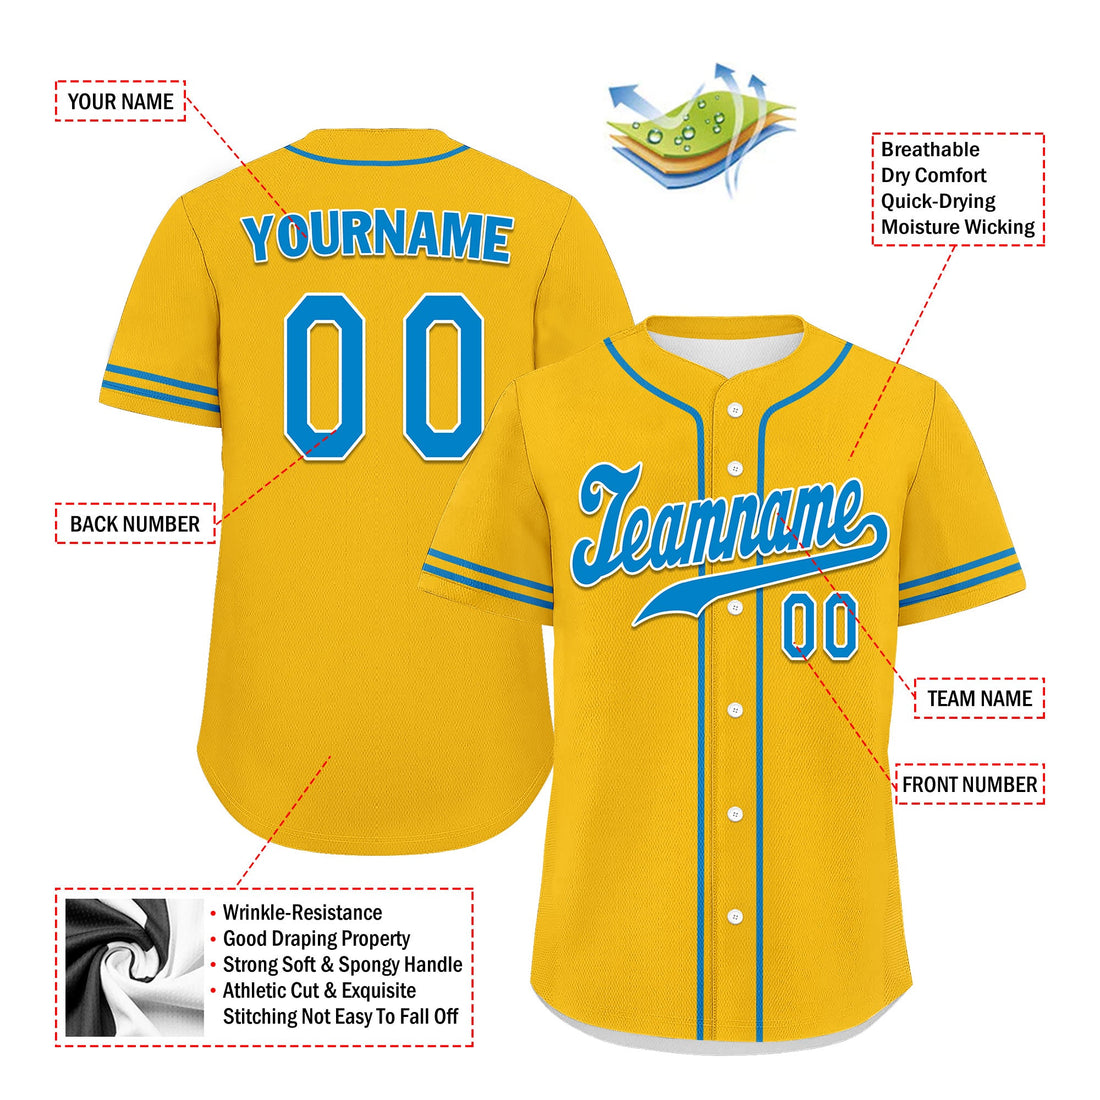 Custom Yellow Classic Style Cyan Personalized Authentic Baseball Jersey UN002-bd0b00d8-9